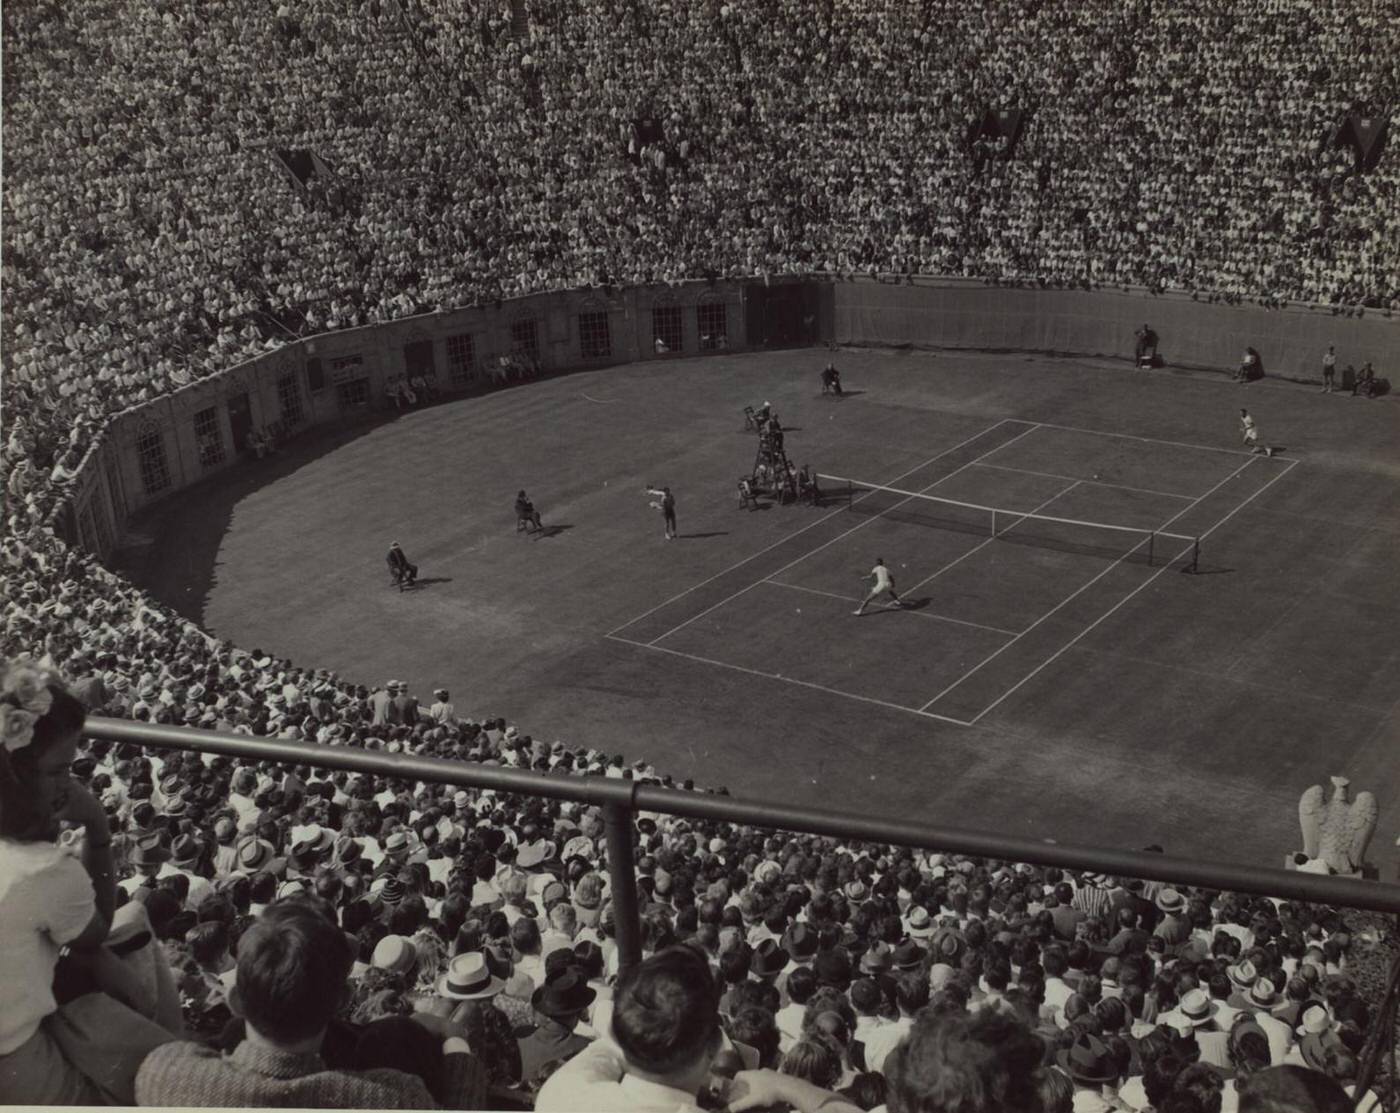 Forest Hills Tennis Stadium, Queens, 1950S.